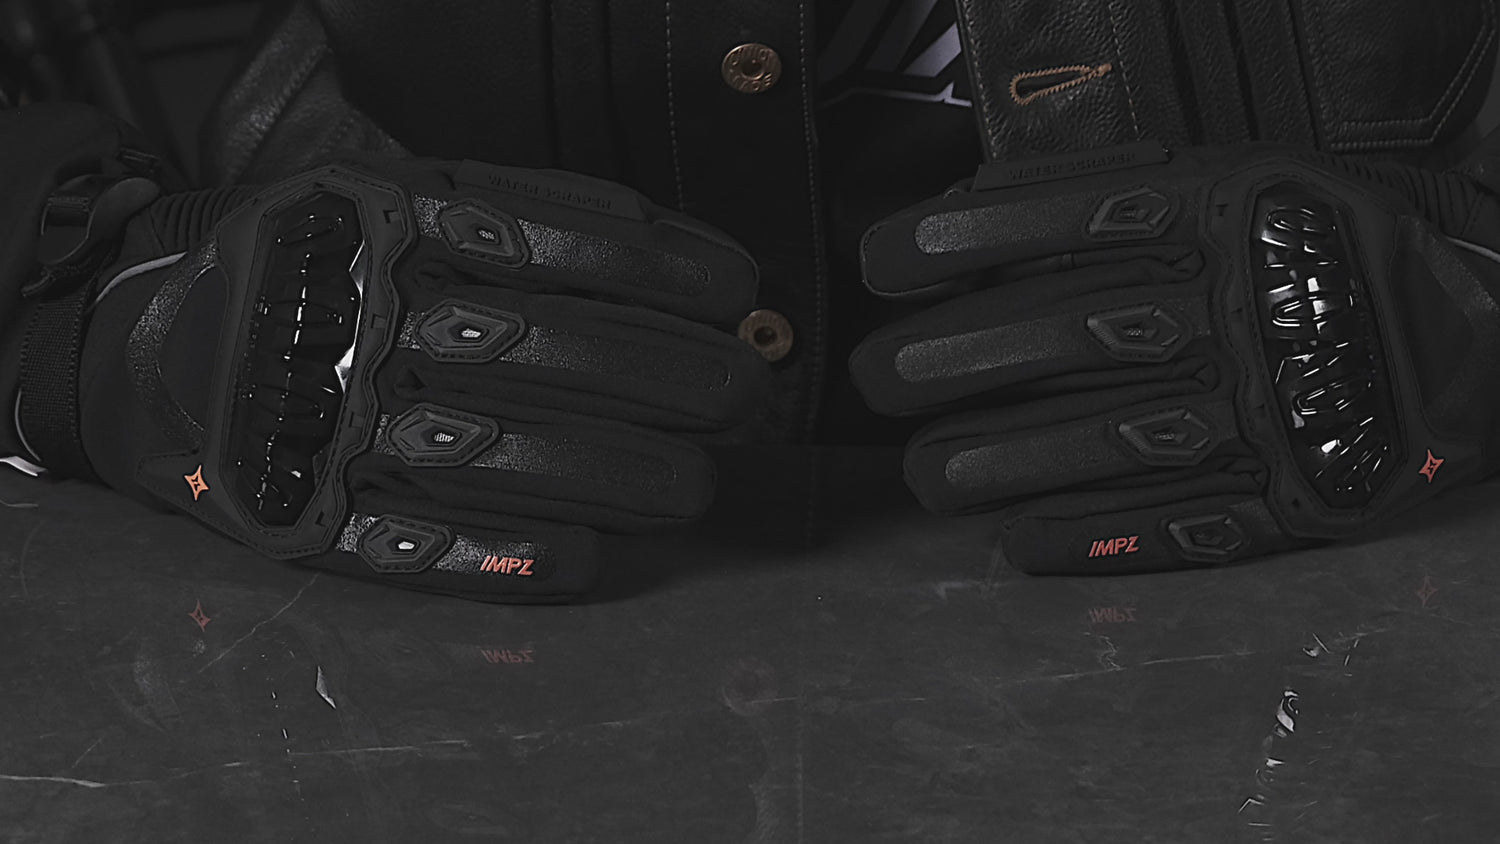 IRON JIAS Guantes de motos Invierno cálido impermeable guantes de protección a prueba de viento Guantes Luvas modelos de actualización (puede pantalla táctil)